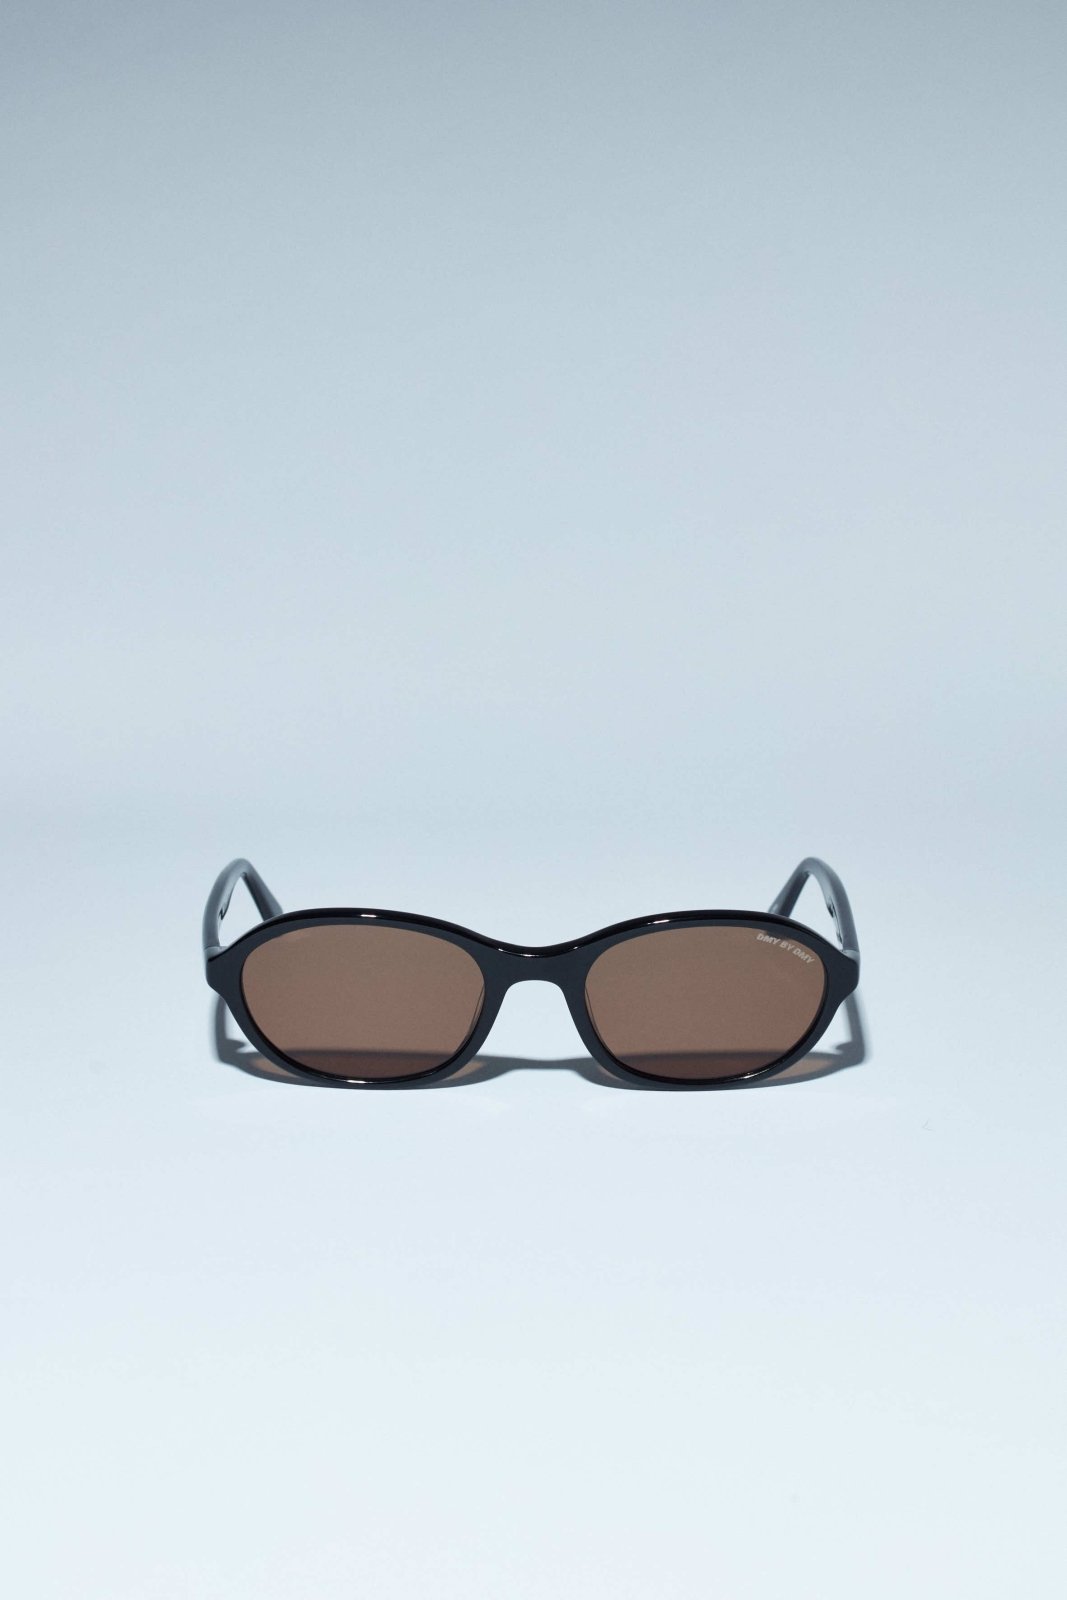 Bibi Black Oval Sunglasses · DMY BY DMY